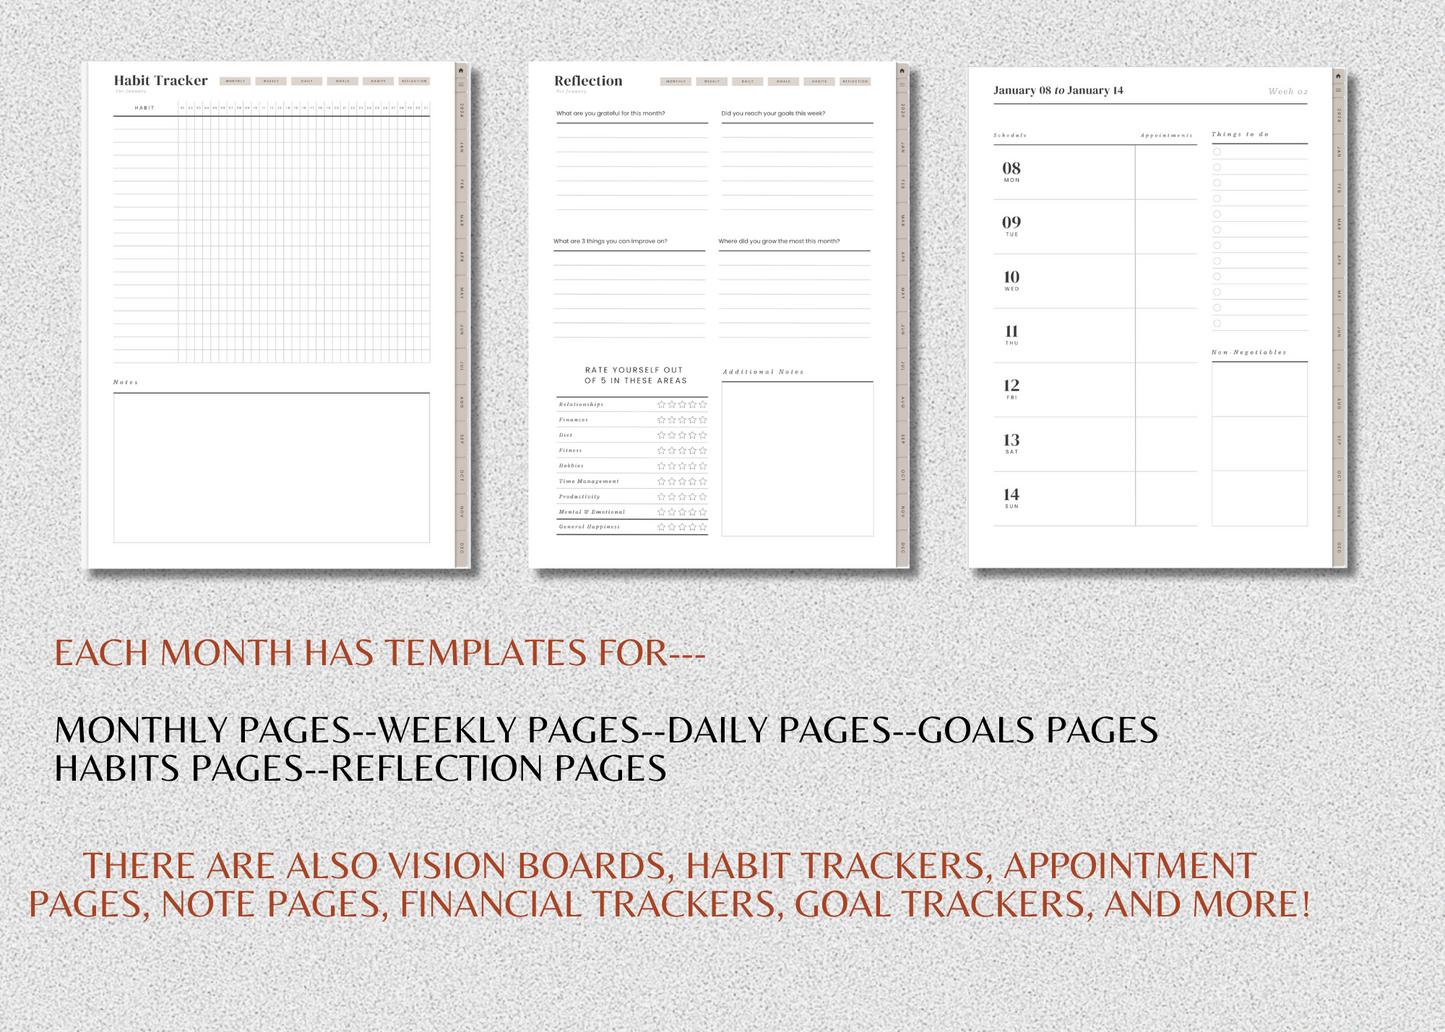 Digital Planner Canva Templates For 2024--575 Page Customizable White Label Digital Planner Template Plus Bonus Printable Planner Template- PLR